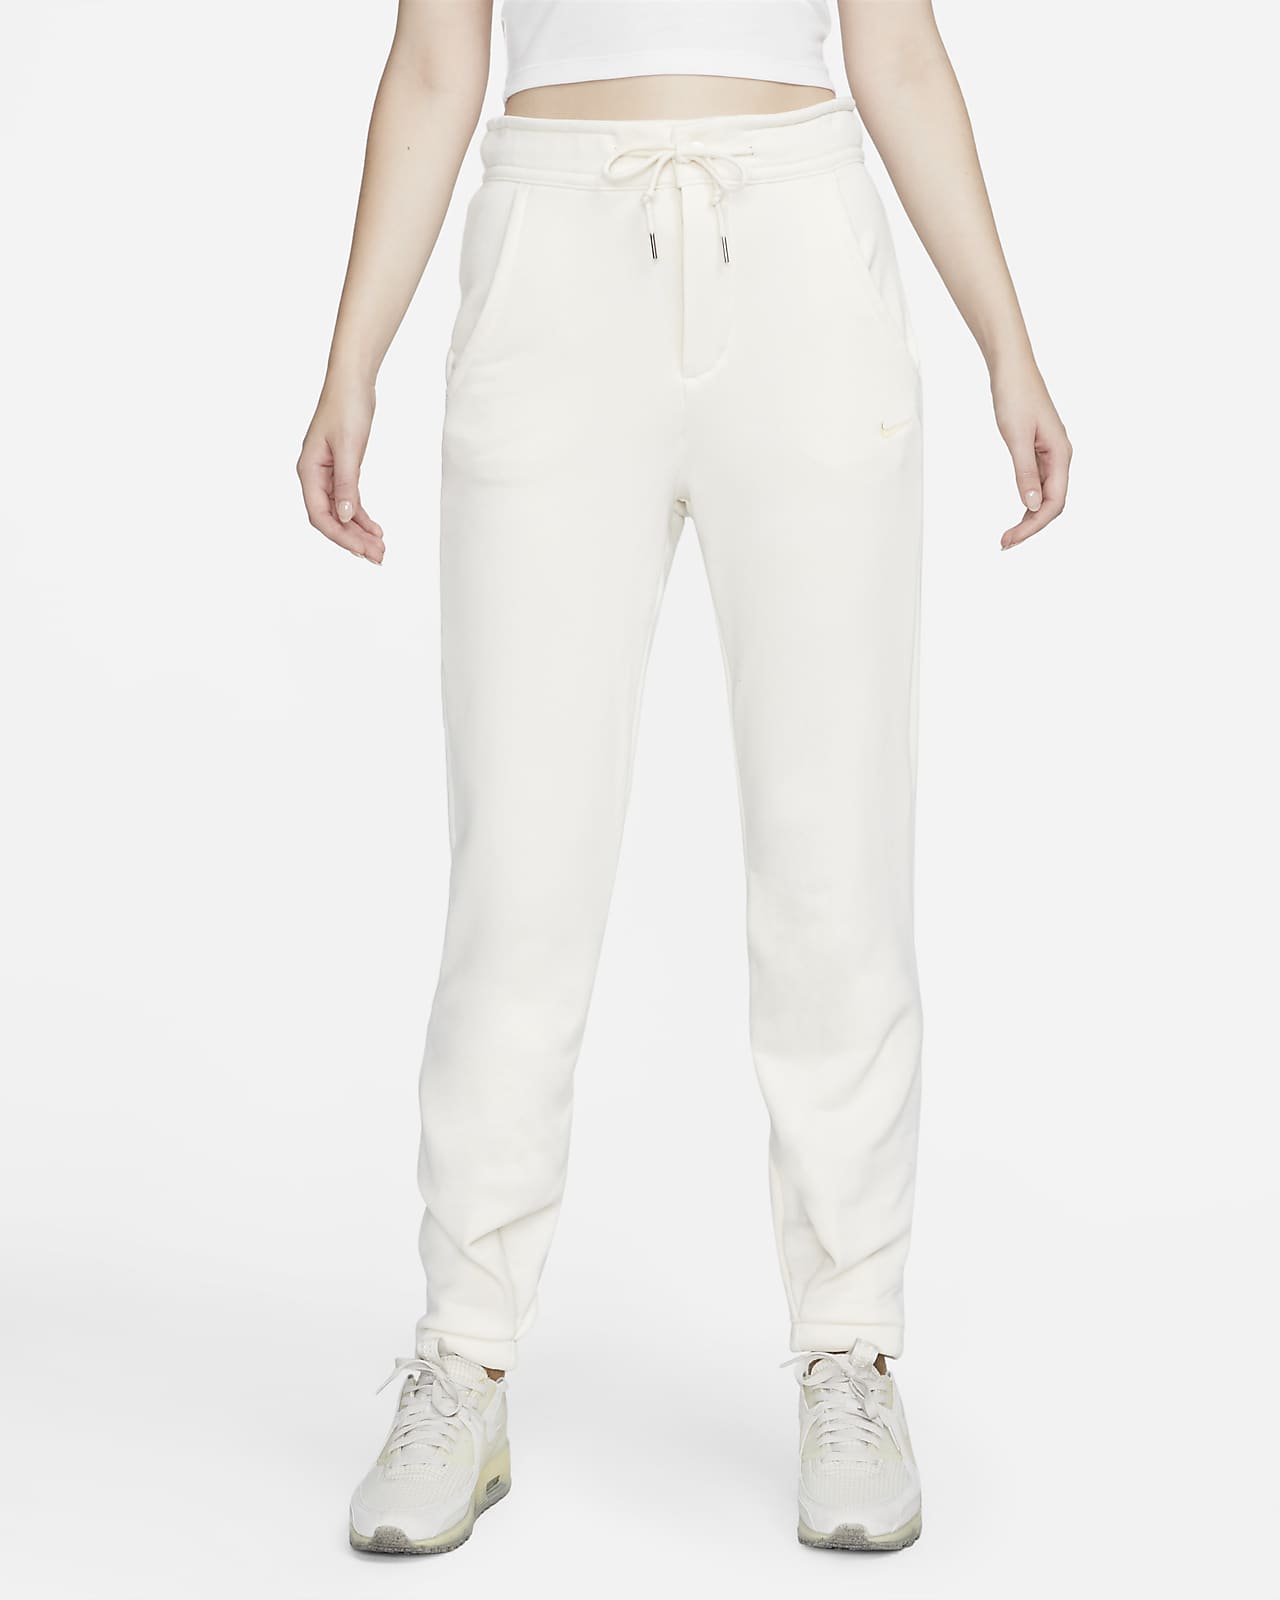 Pantaloni in French Terry a vita alta Nike Sportswear Modern Fleece – Donna